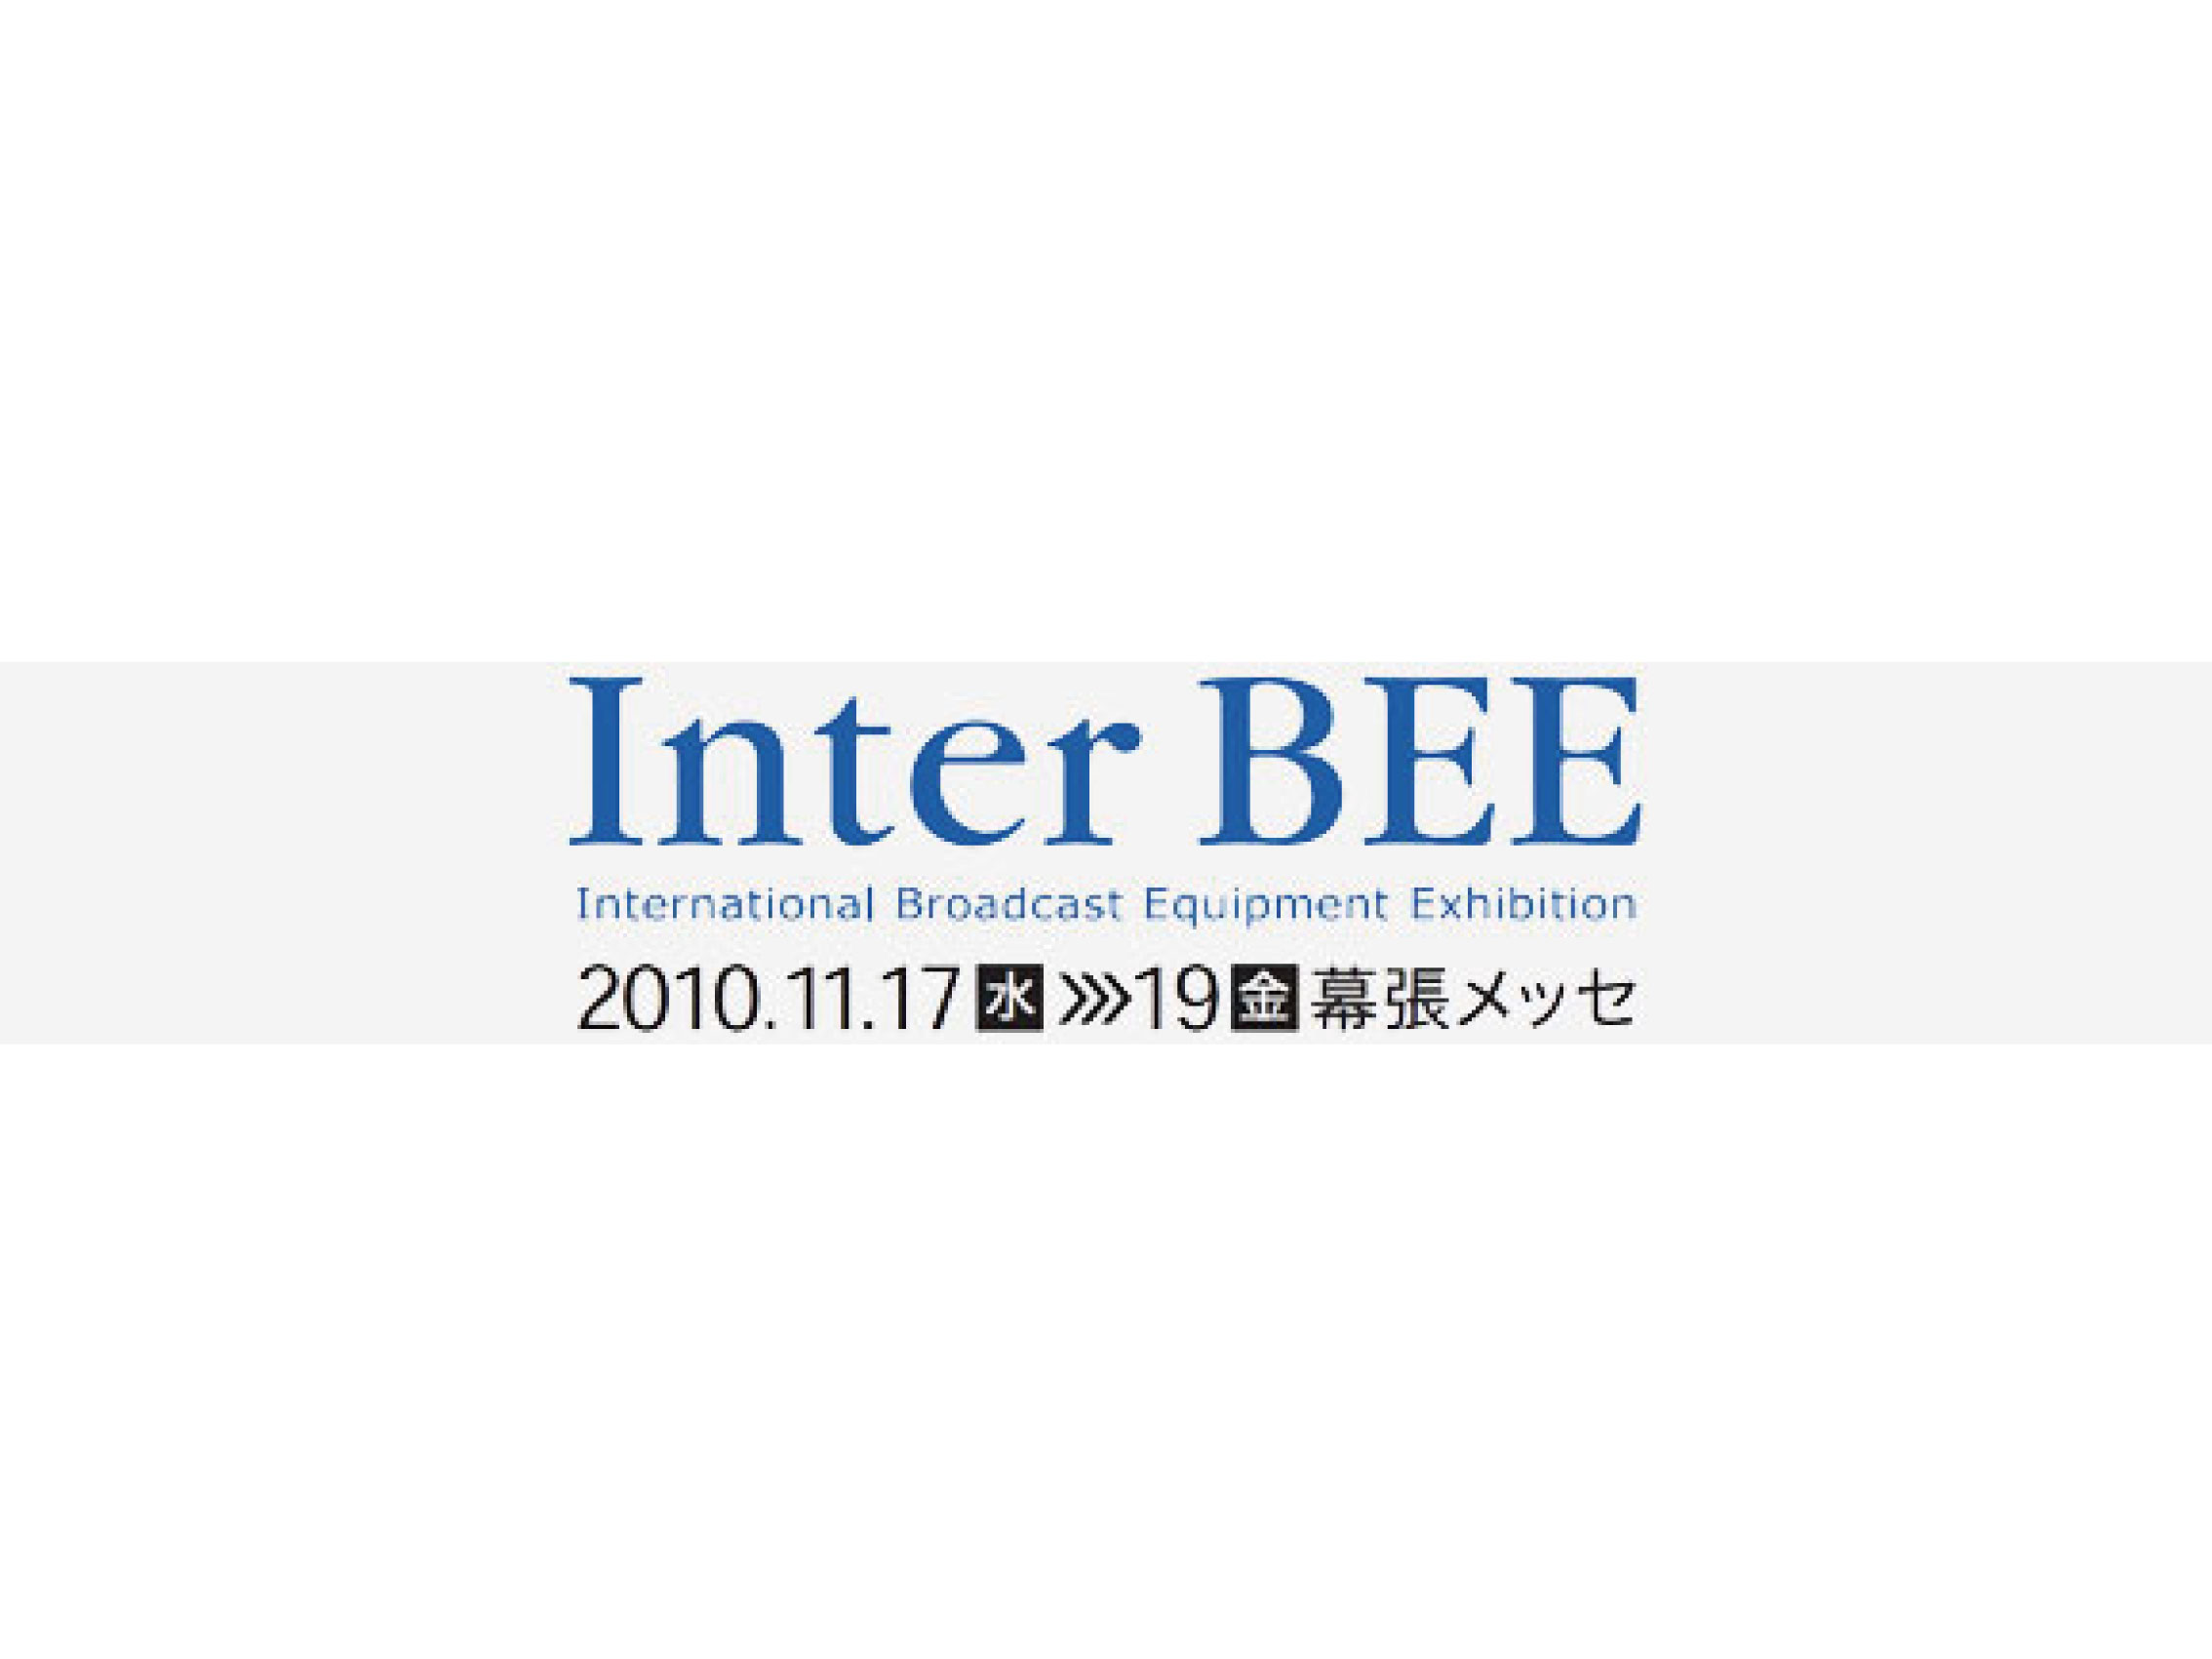 interbee2010_logo